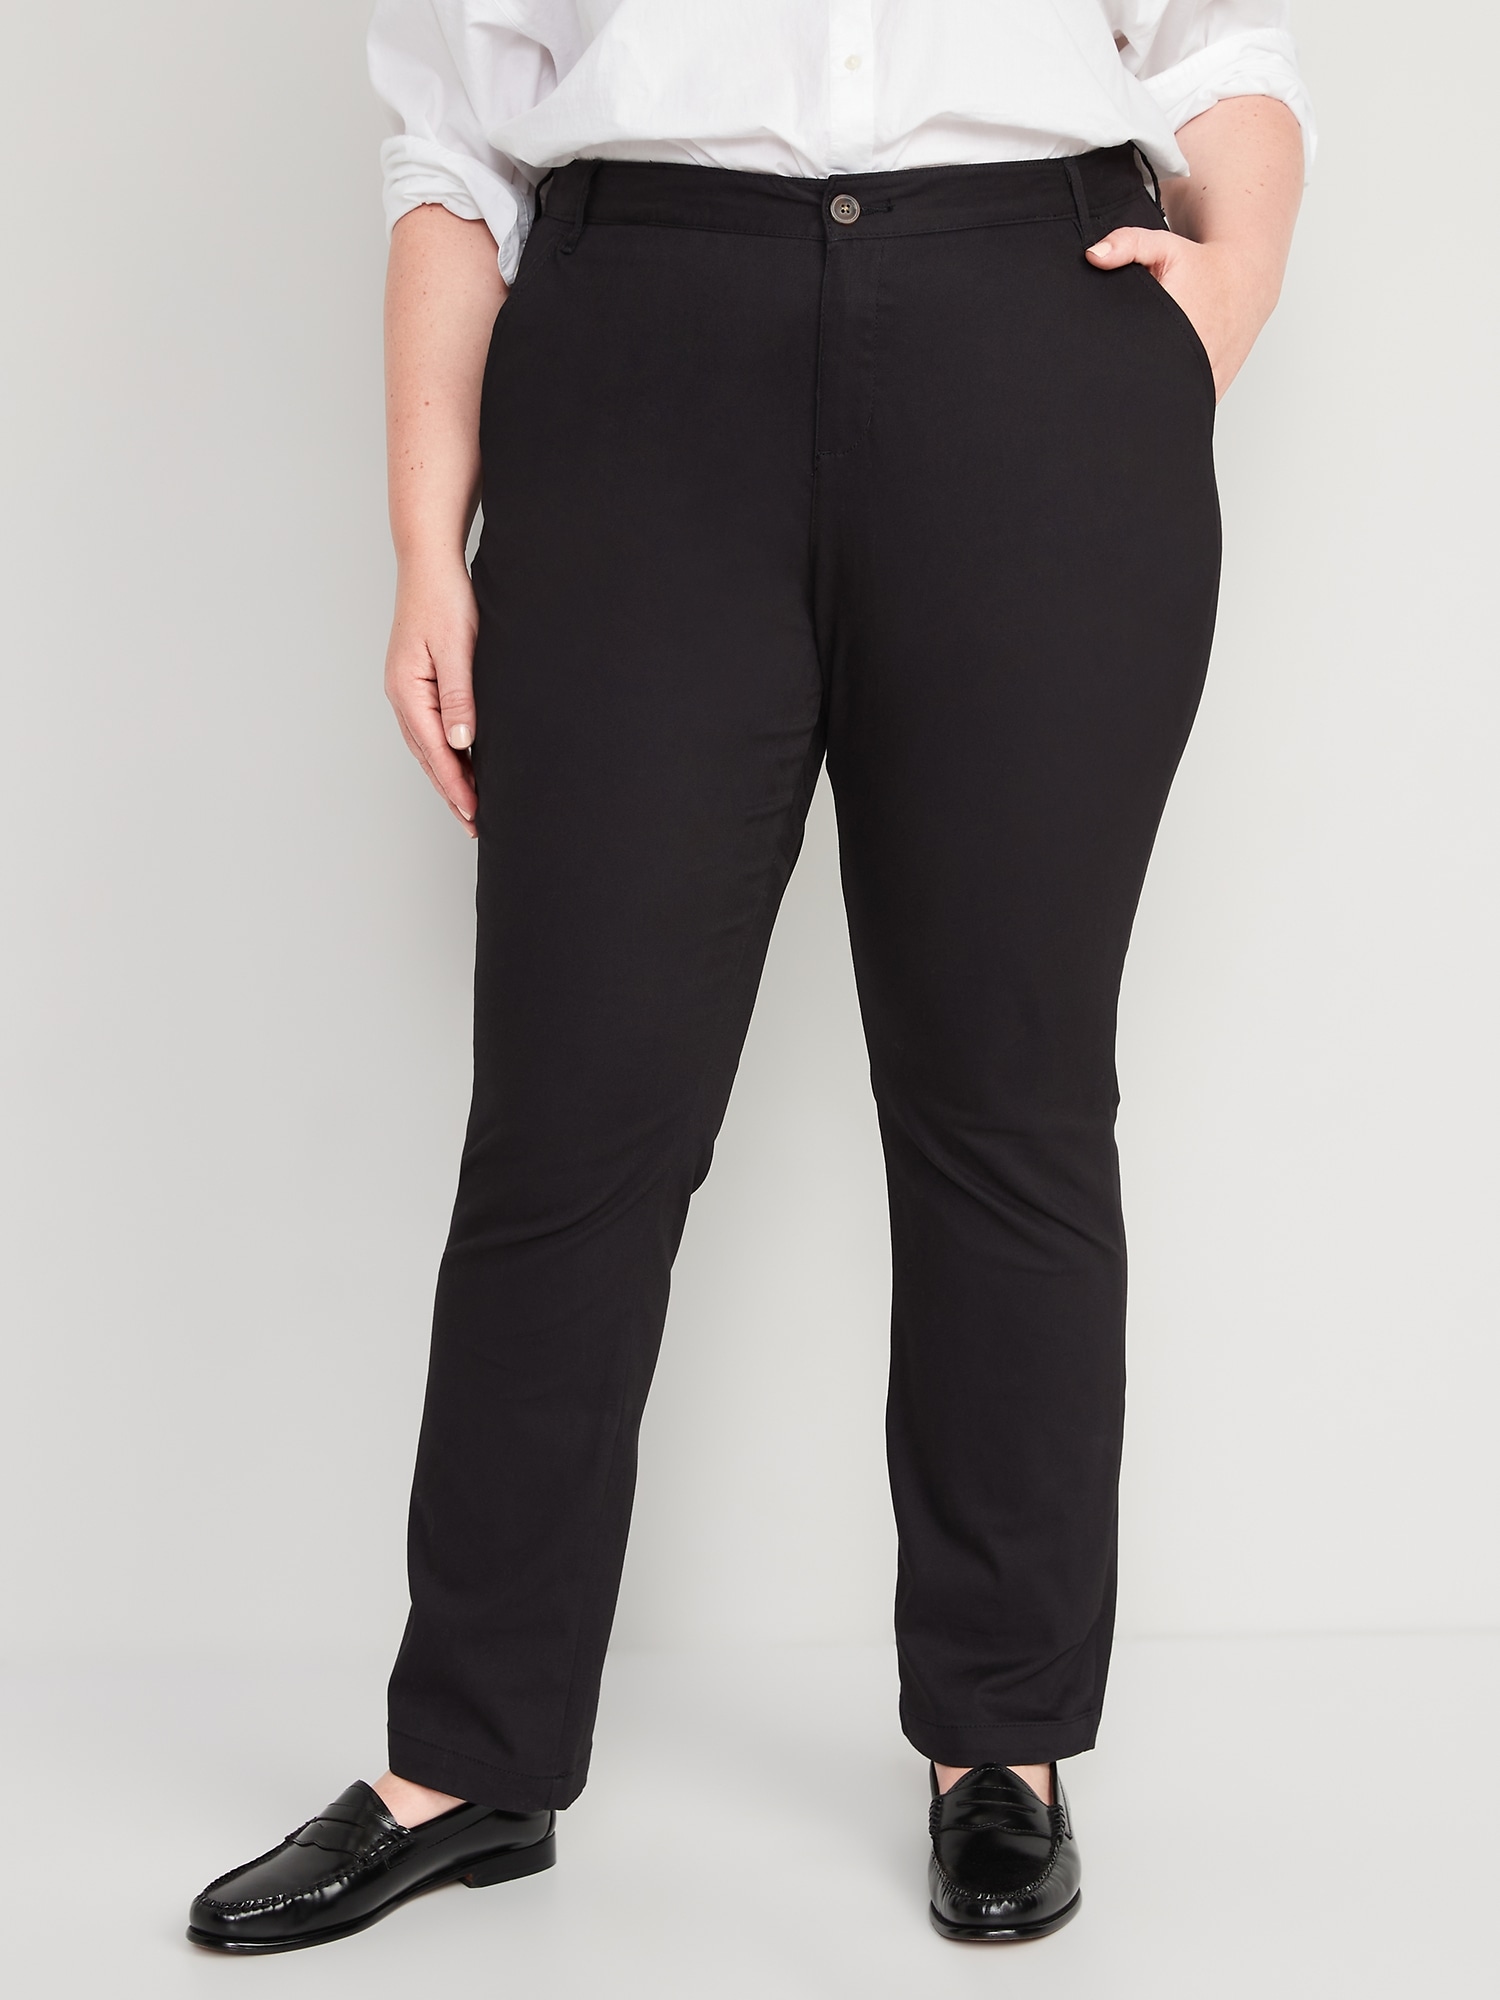 Istyle Can Solid Black High Waist Split Hem Flare Leg Pants Trouser for  Women's & Girls | Trousers for Women | Pants for Women | Formal Pants for  Women | Pant for Women